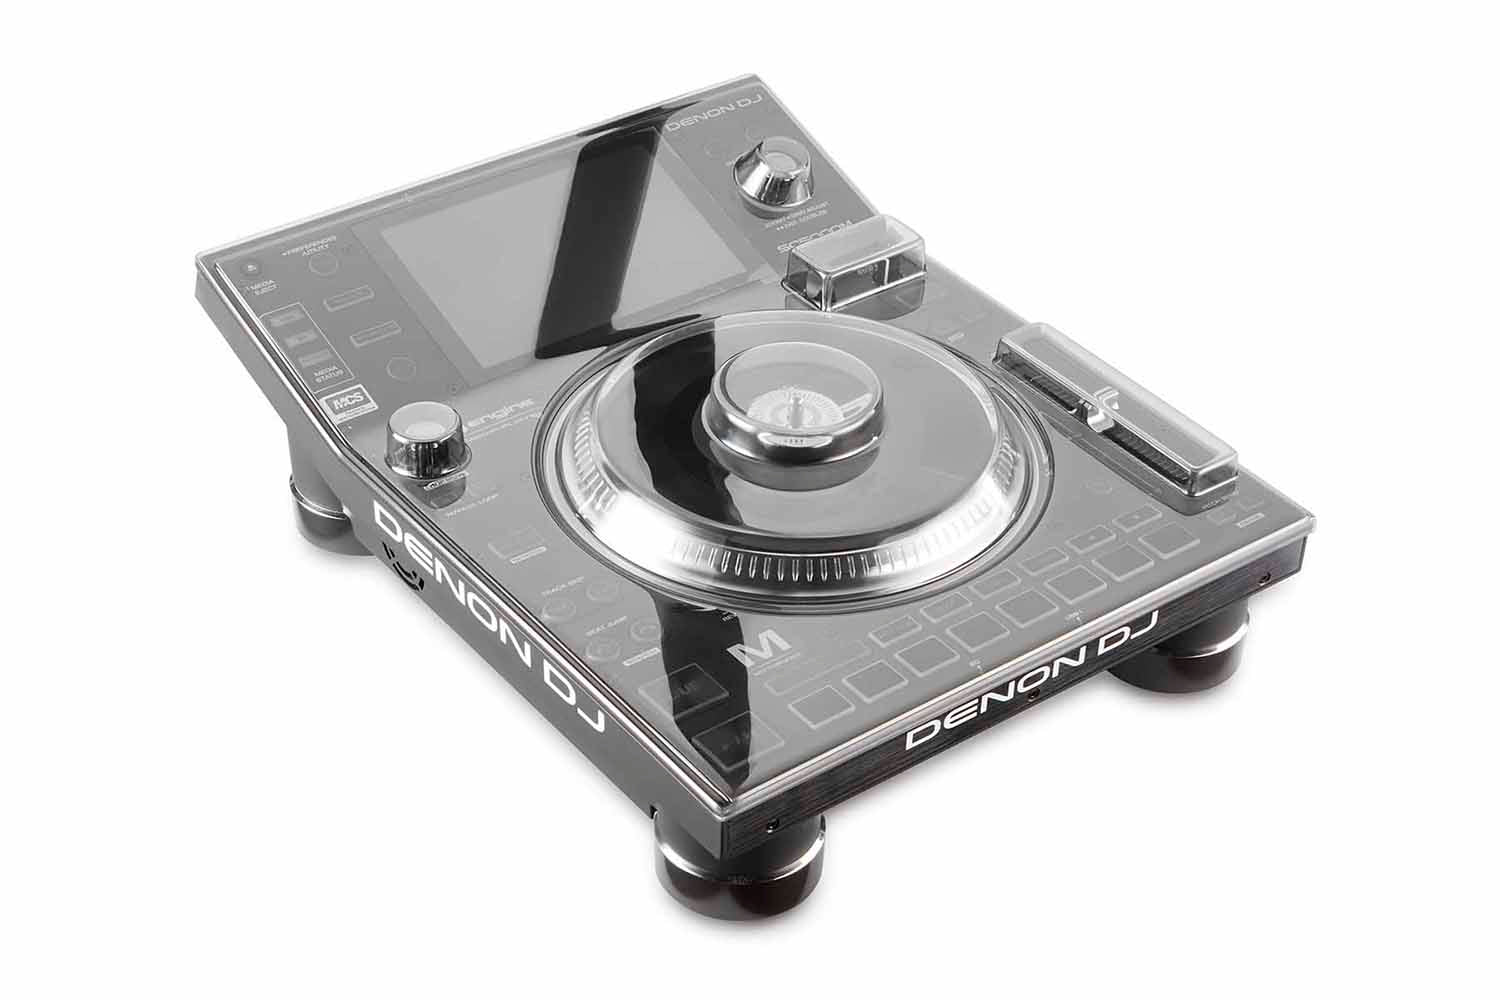 B-Stock: Decksaver DS-PC-SC5000M Protection Cover for Denon SC5000 / SC5000M Media Player - Hollywood DJ